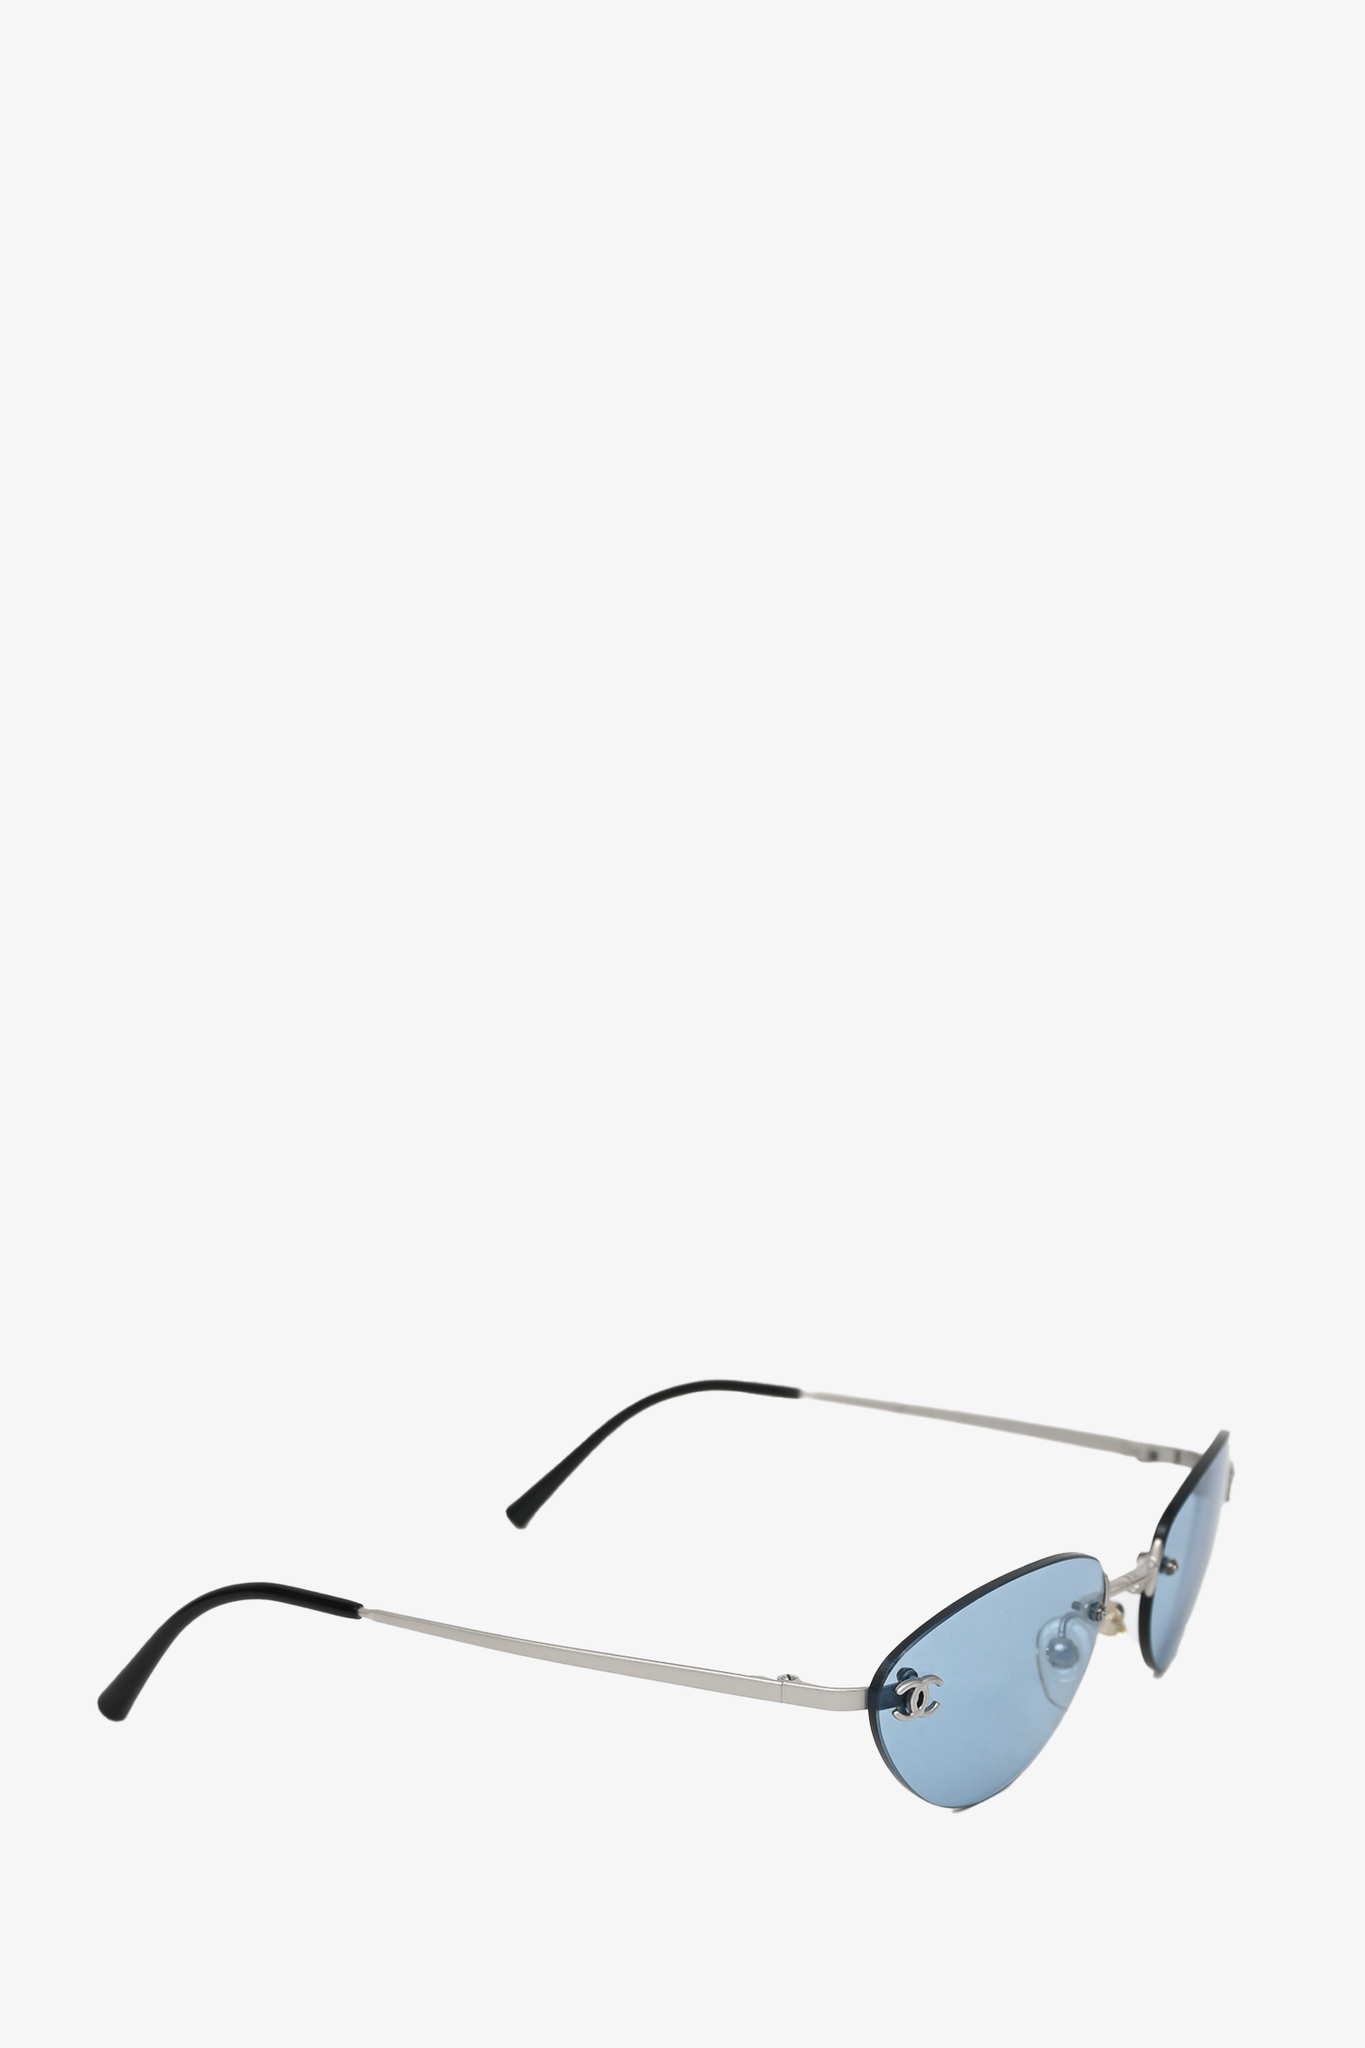 Louis Vuitton MONOGRAM 2020-21FW Monogram Eclipse Blanket (M76032)